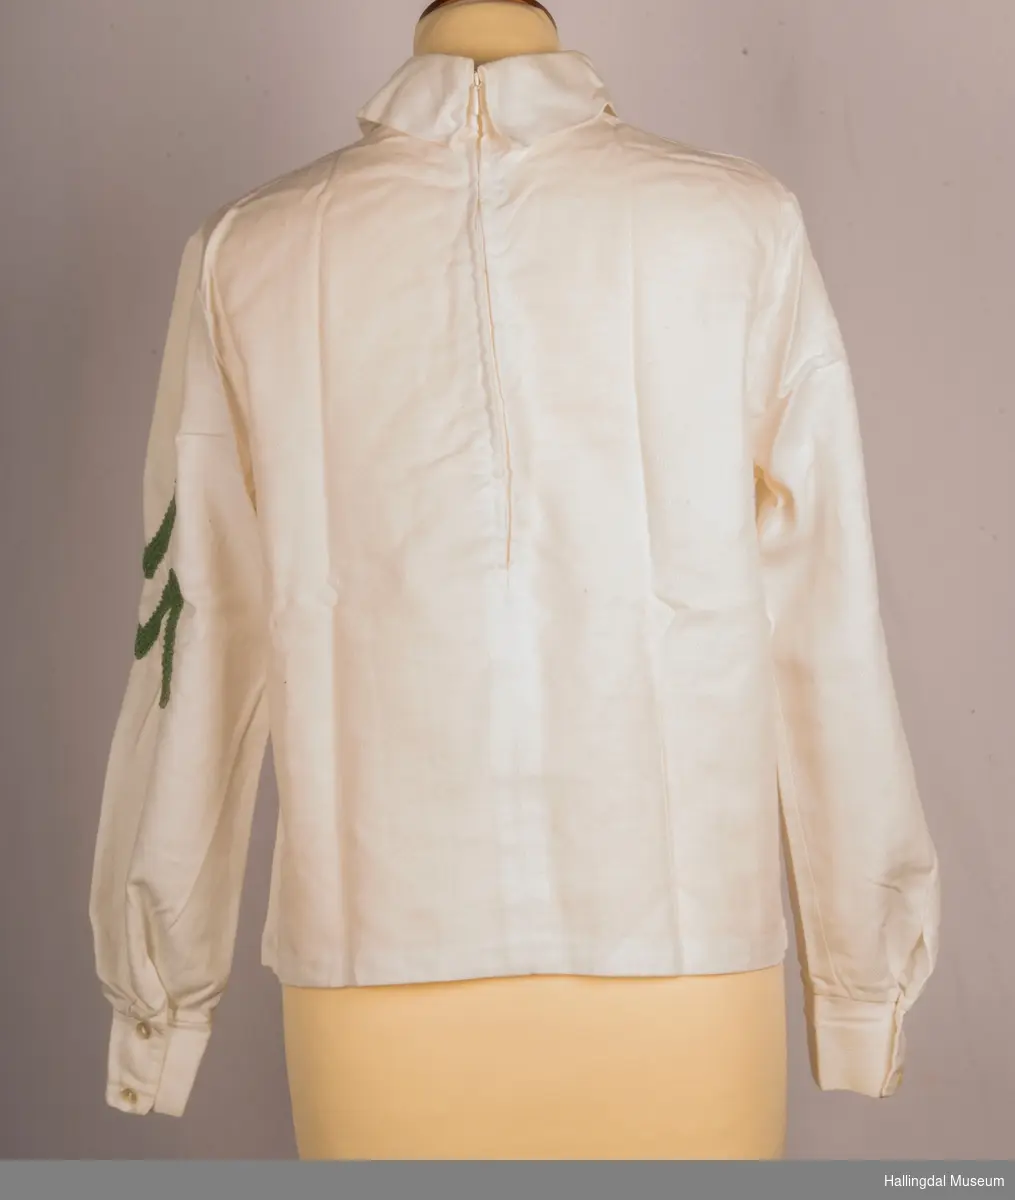 VM bluse som hører til drakt HFN 14365 a+b
60-tallet
Skjorte, bluse med høy krage, glidelås bak.